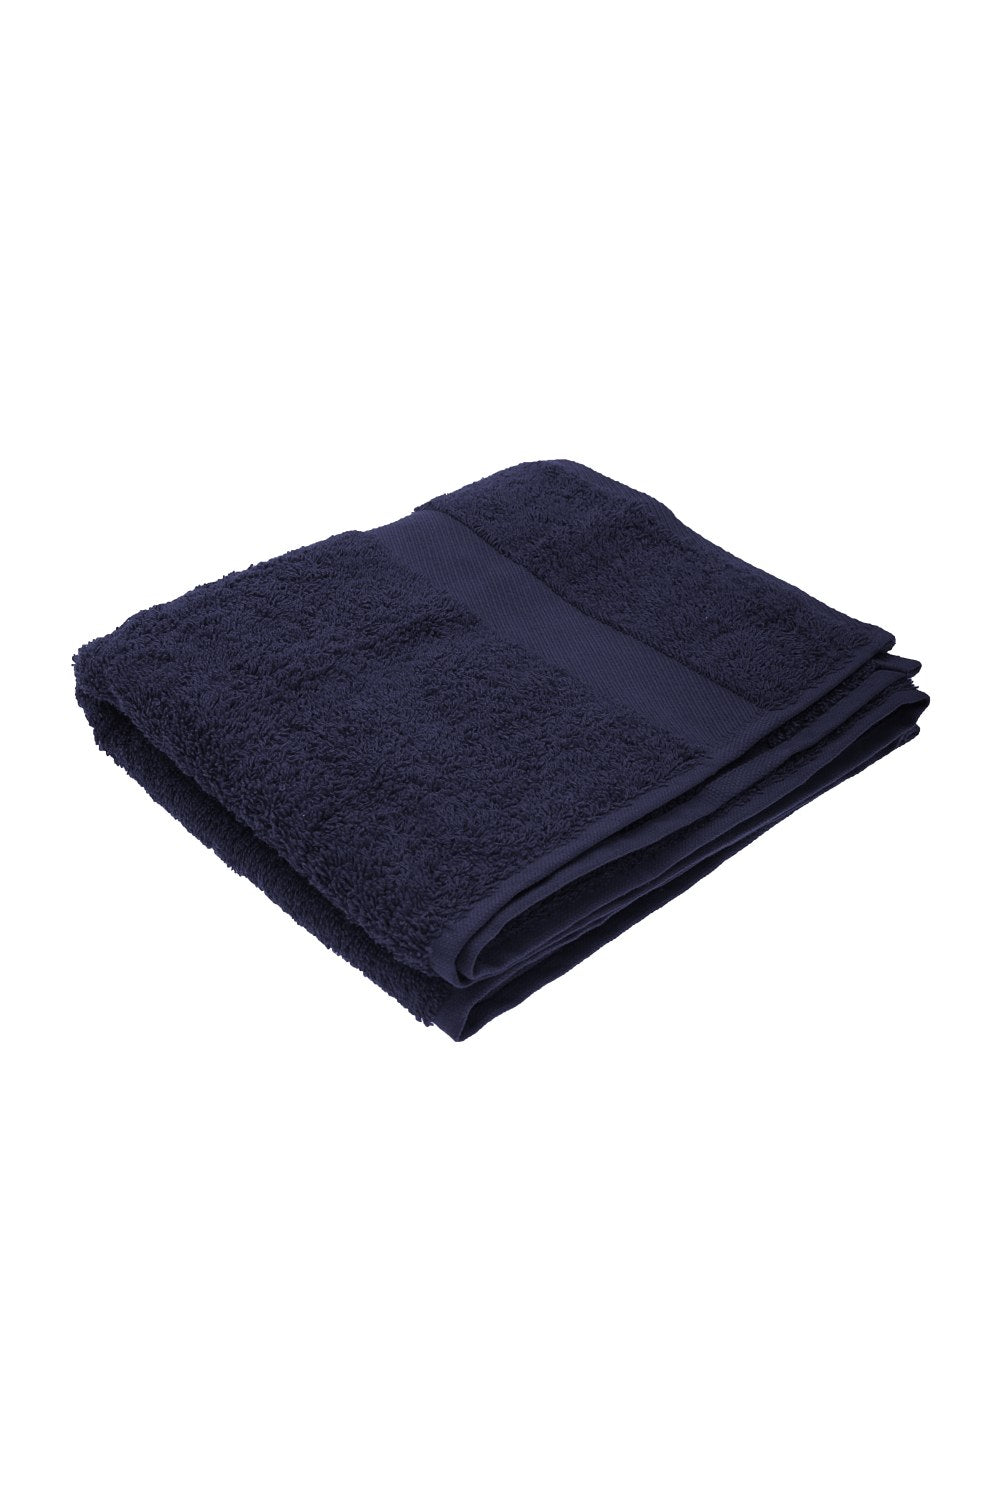 Jassz Premium Heavyweight Plain Towel 20 x 40 inches (Navy Blue) (One Size)